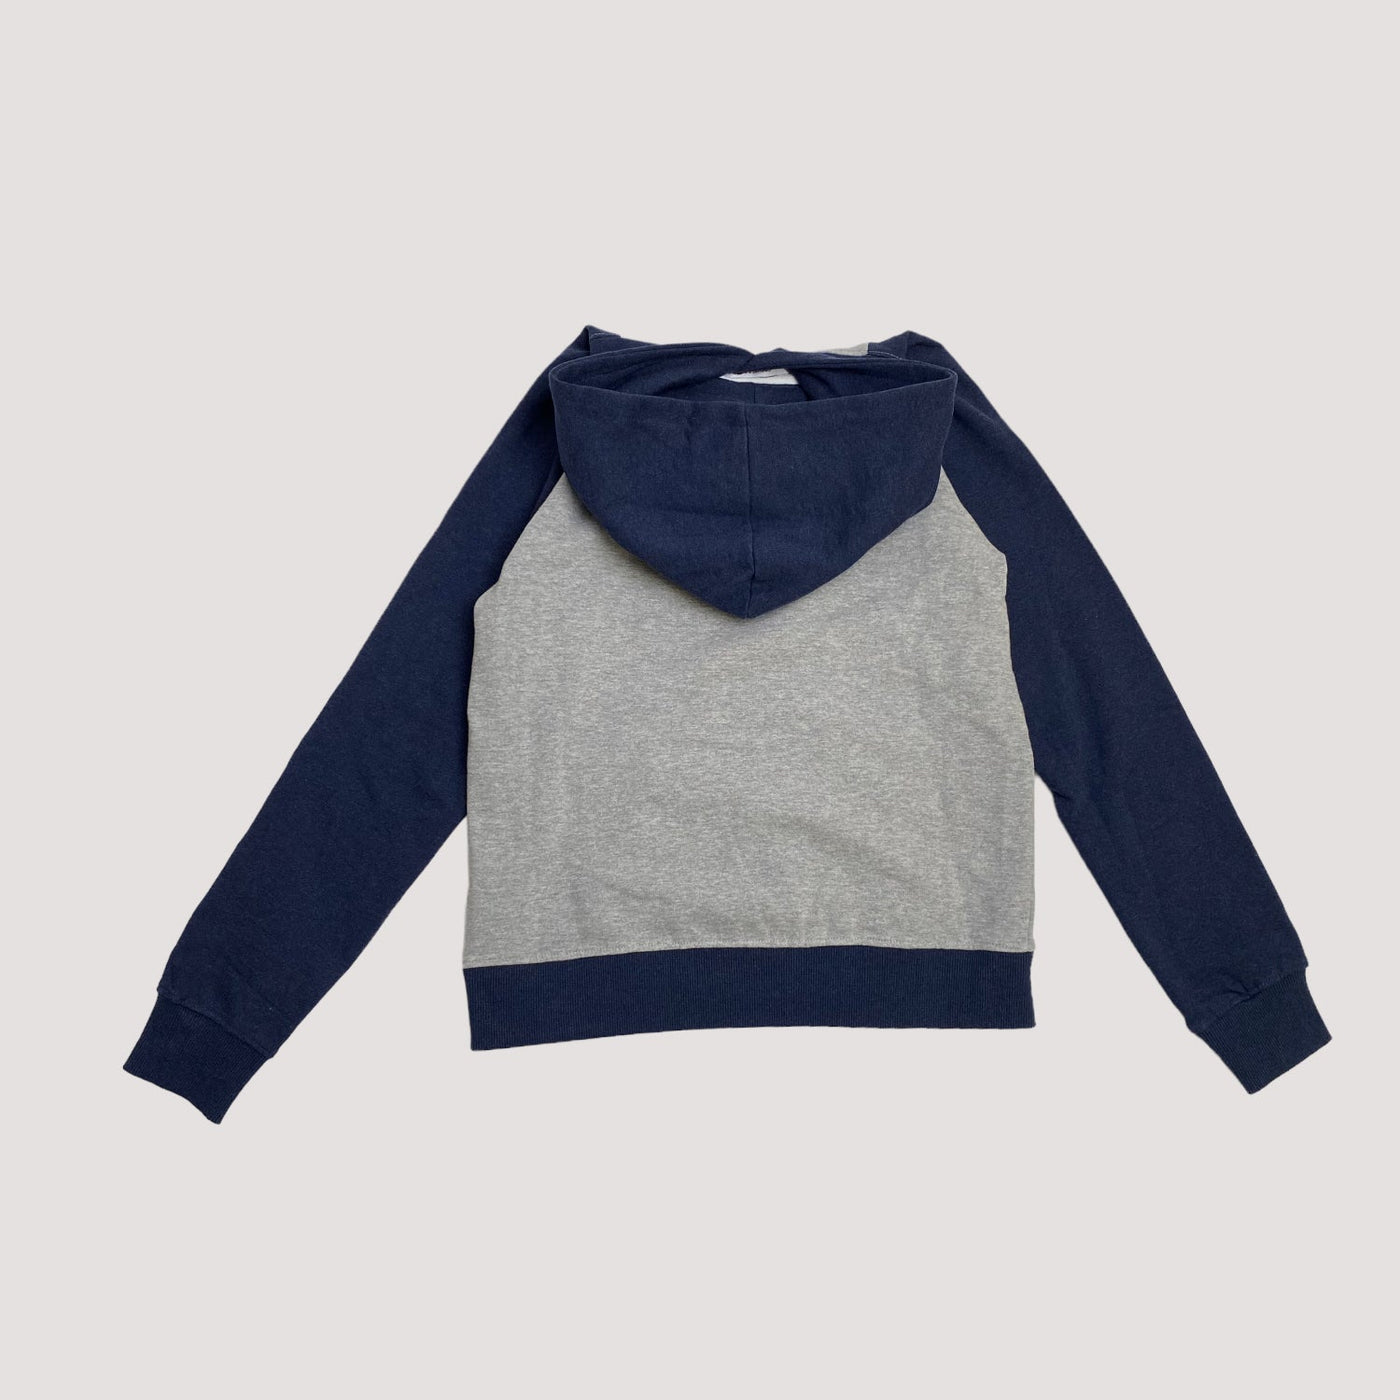 hooded sweatshirt, grey/blue | 164cm